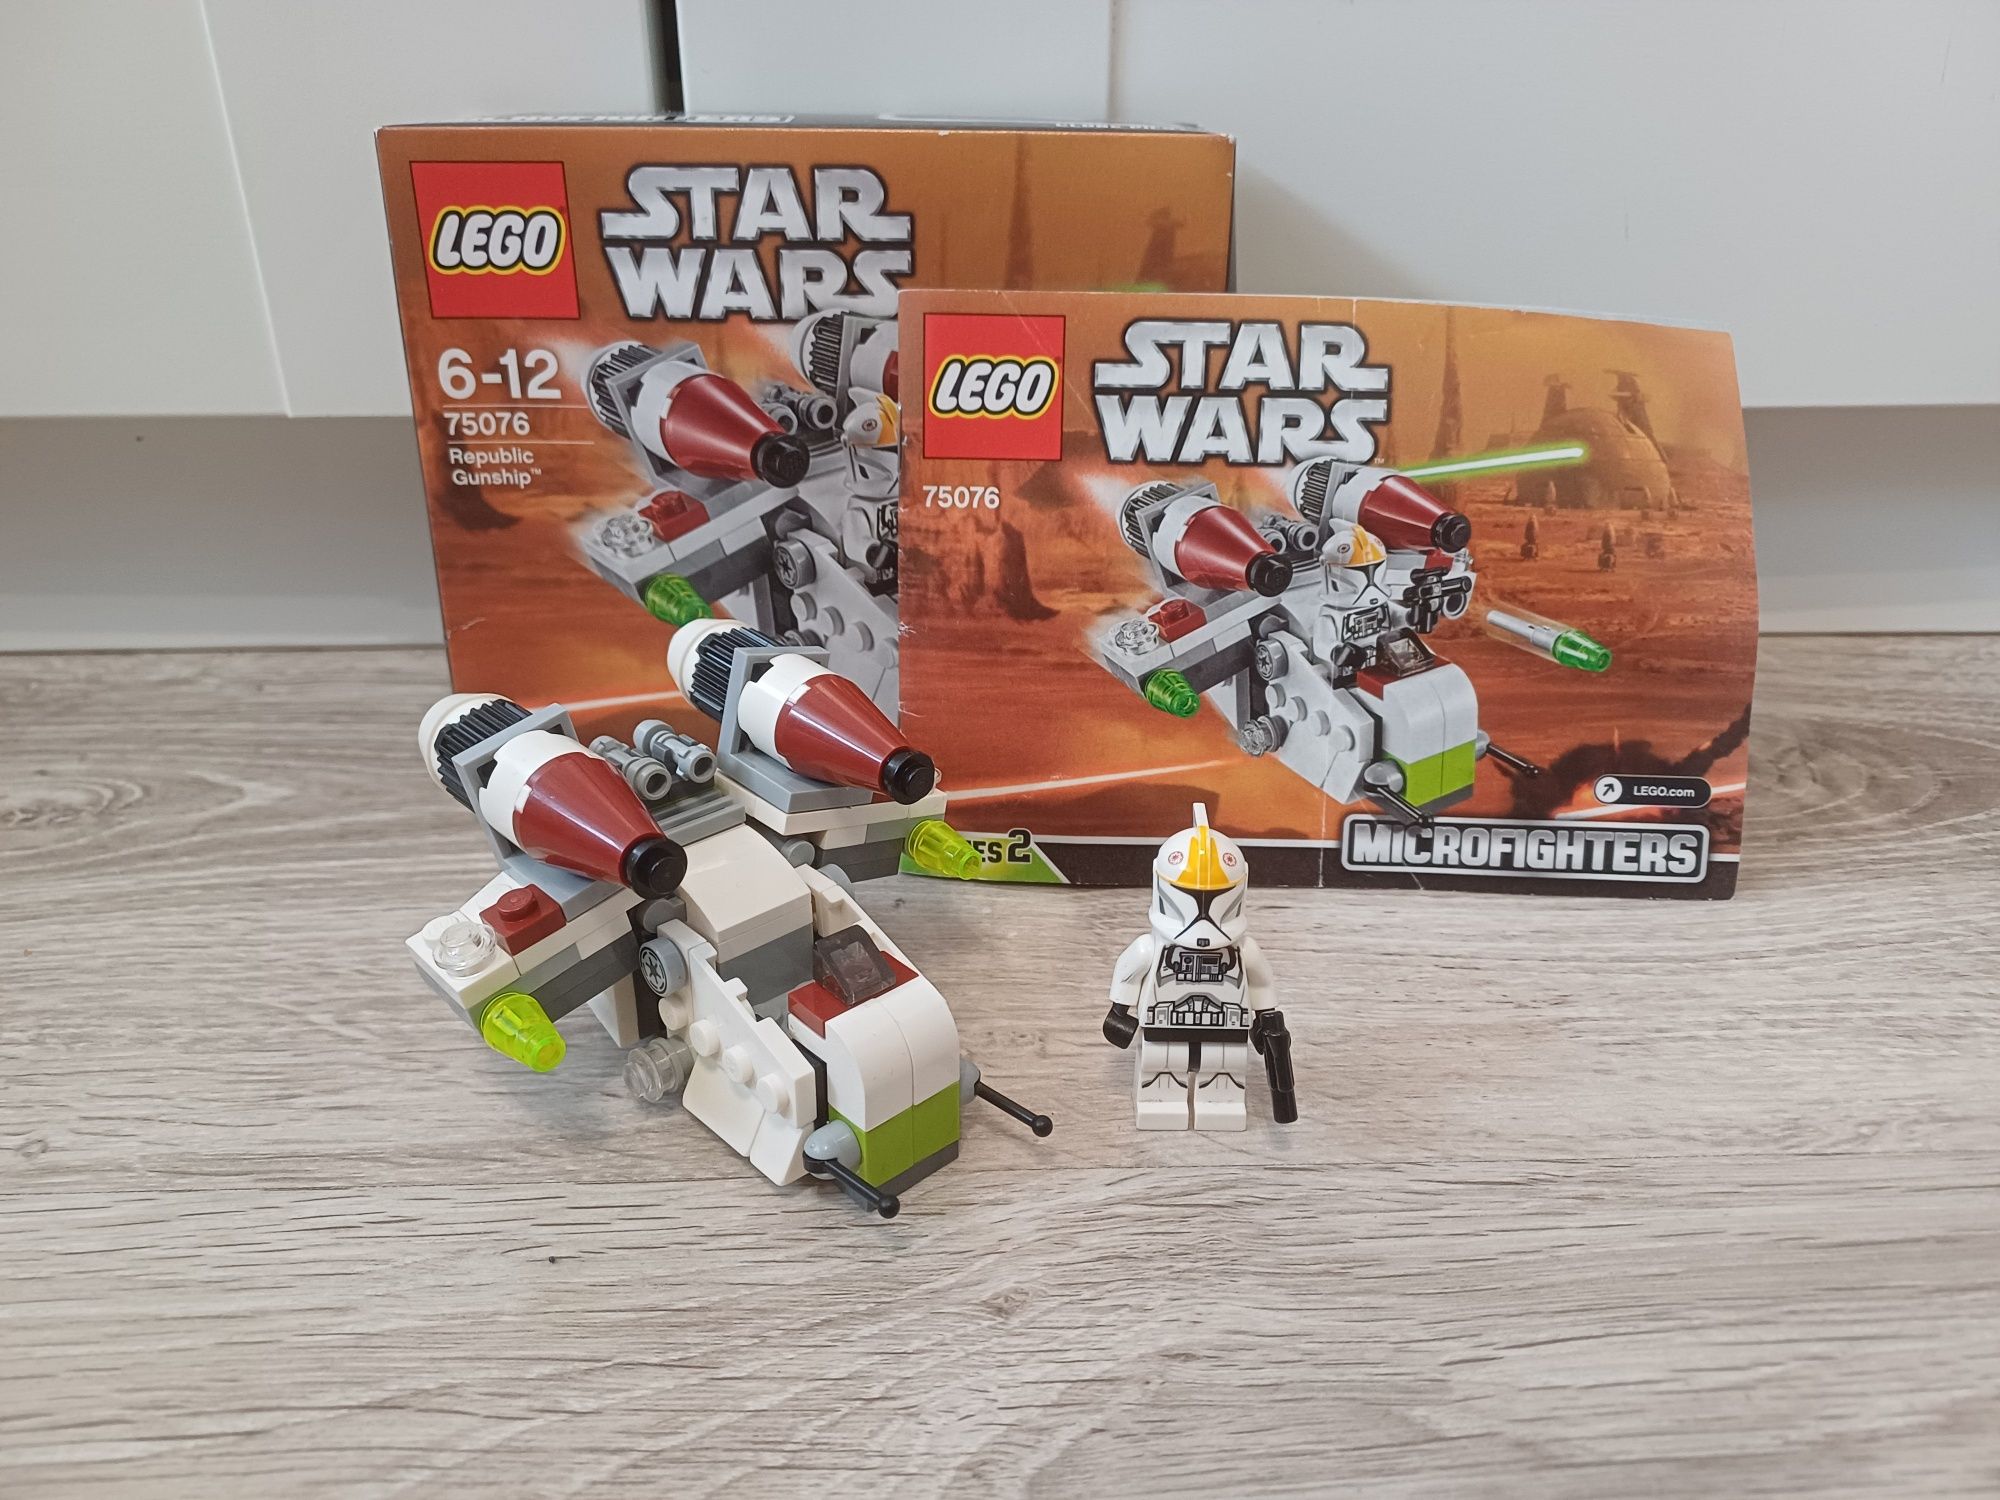 Lego star wars 75076 Republic gunship